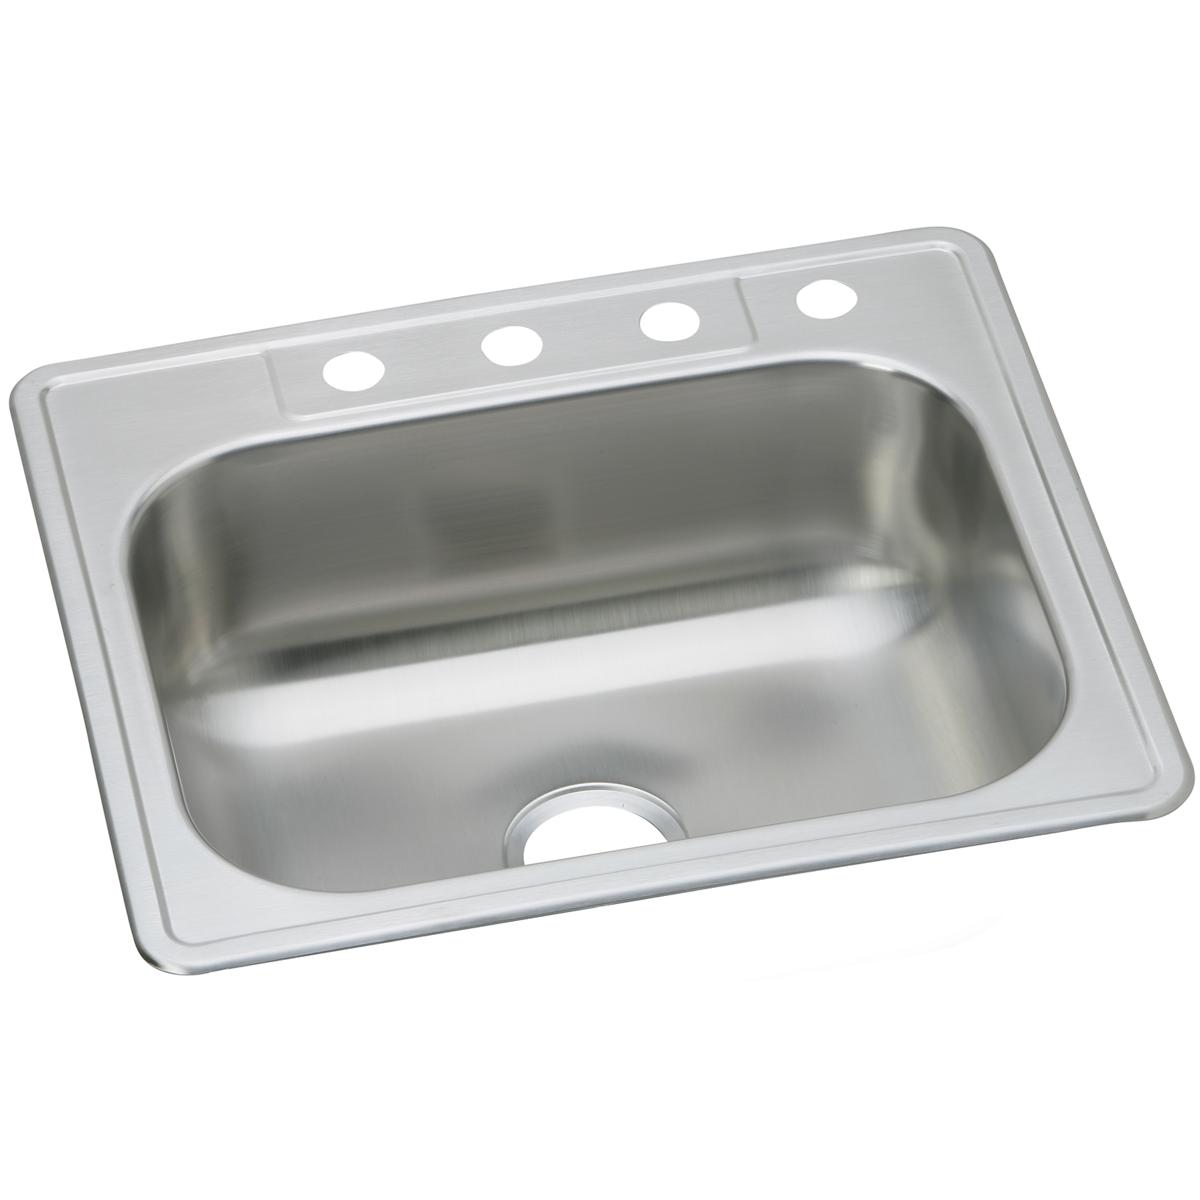 Elkay Dayton 25" x 22" x 8-1/16" Stainless Steel Single Bowl Drop-in Sink